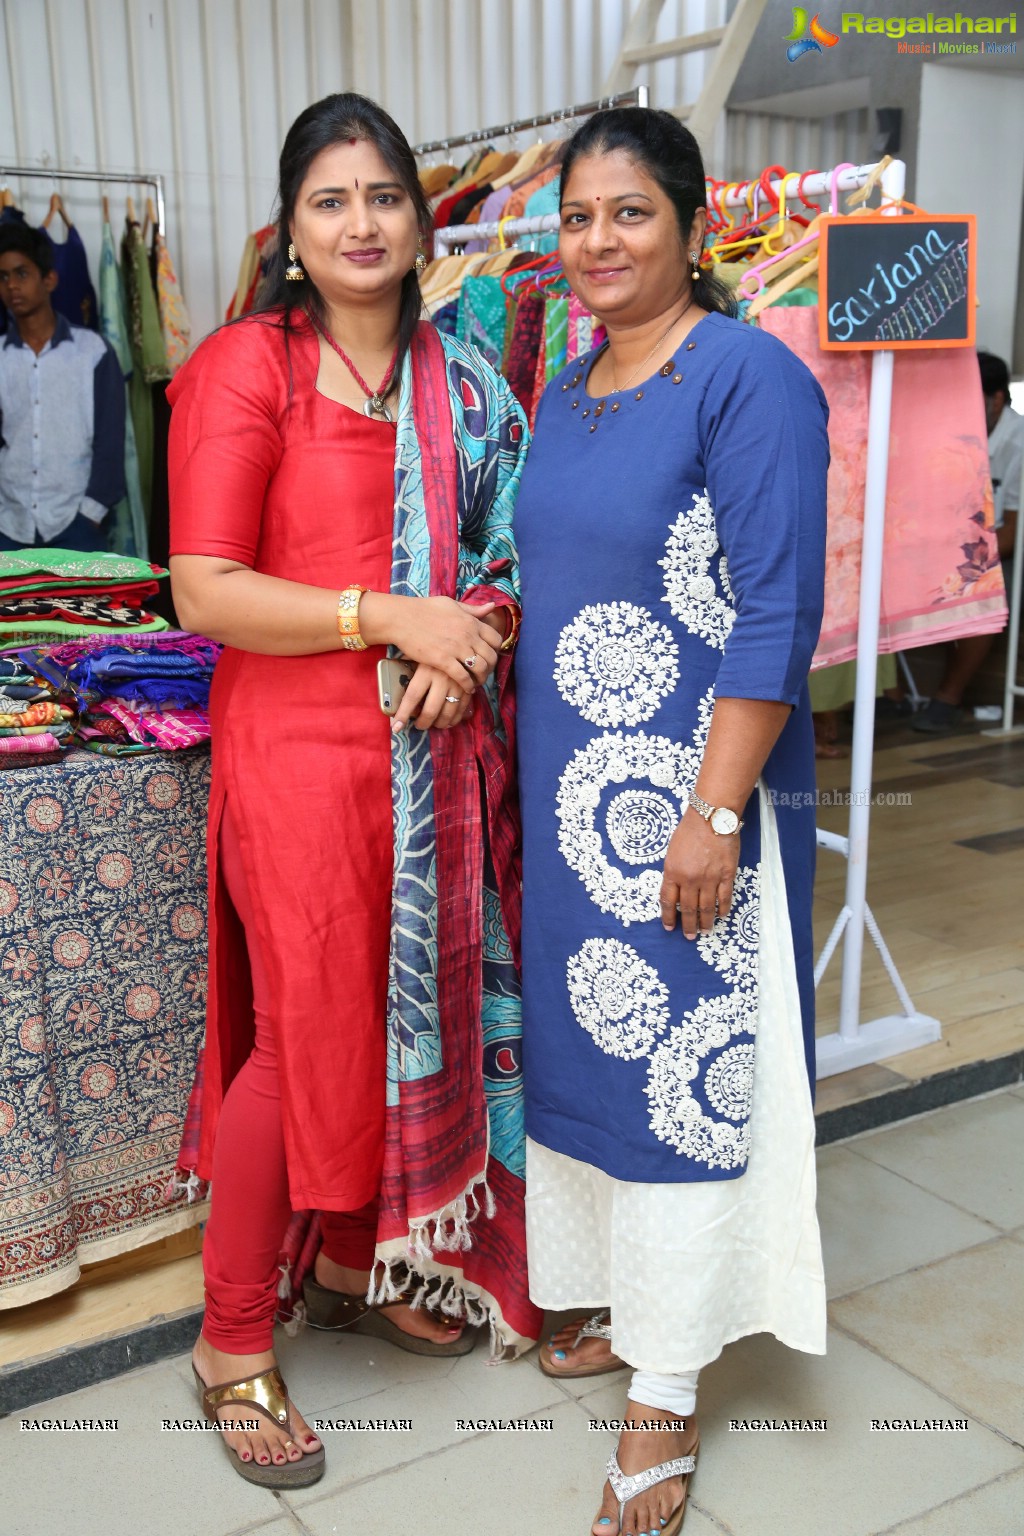 Vastraabharanam Exhibition and Sale (Feb 2018) at Yuktalaya, Madhapur